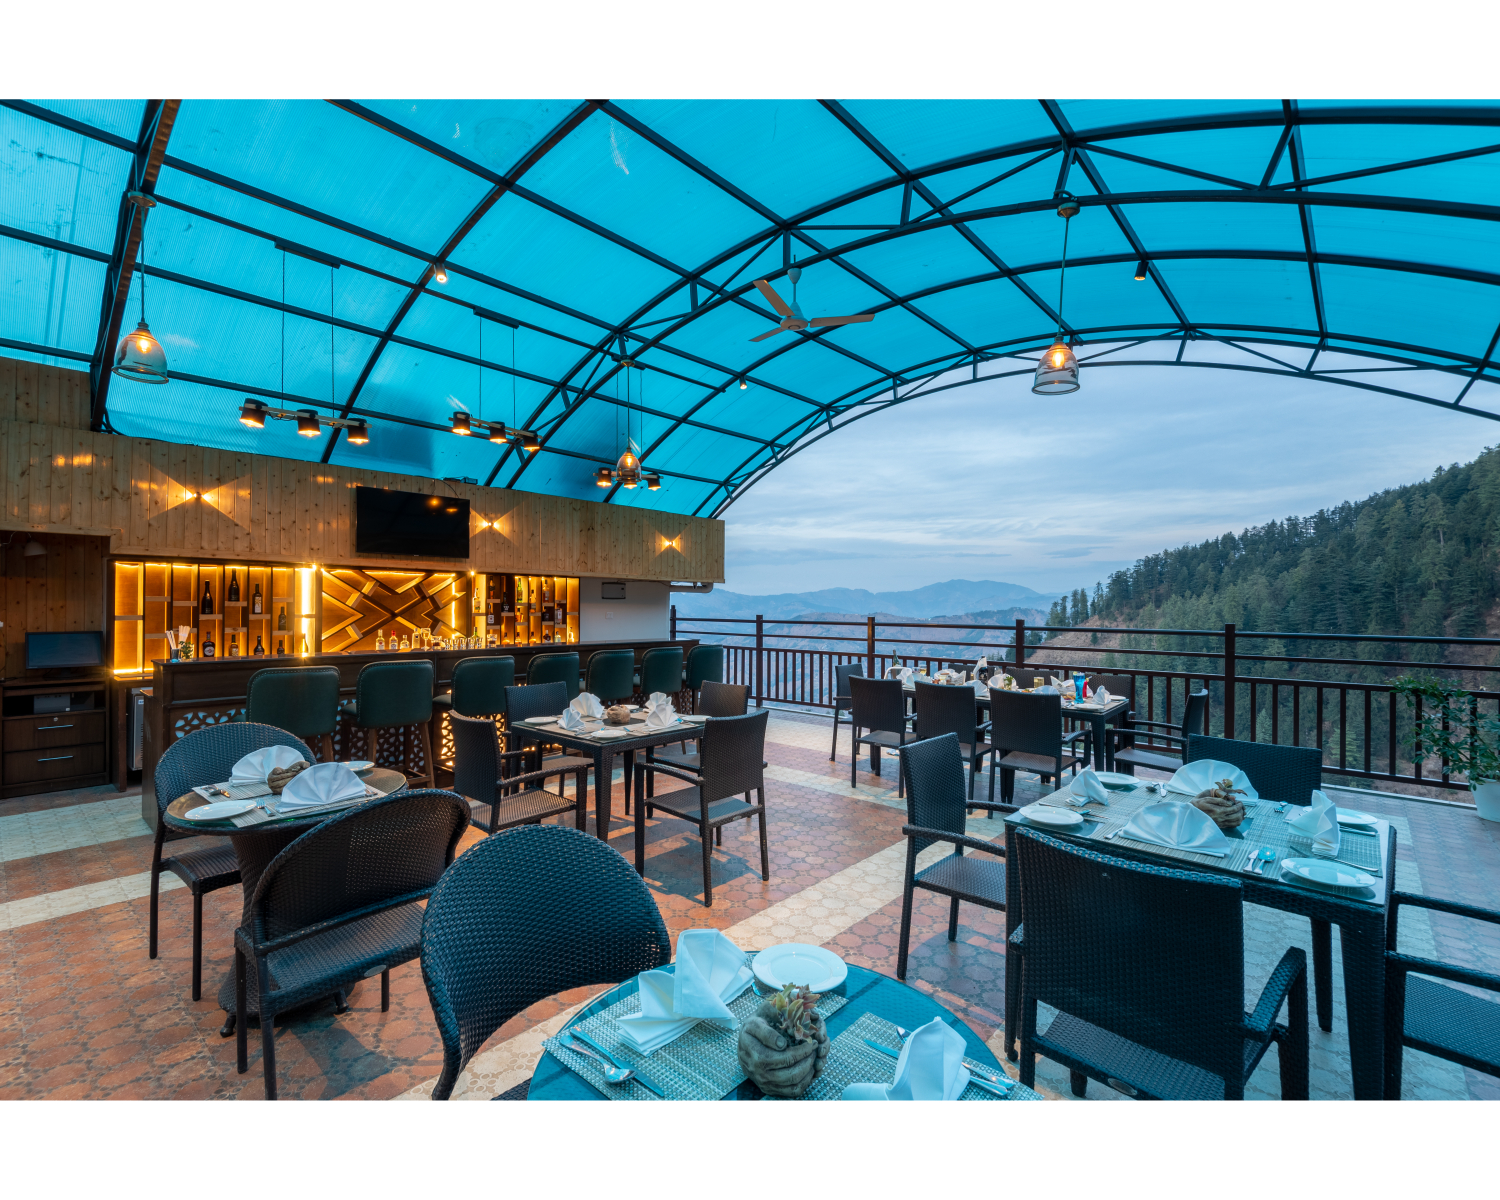 Queen Himya Resort By DLS Hotels